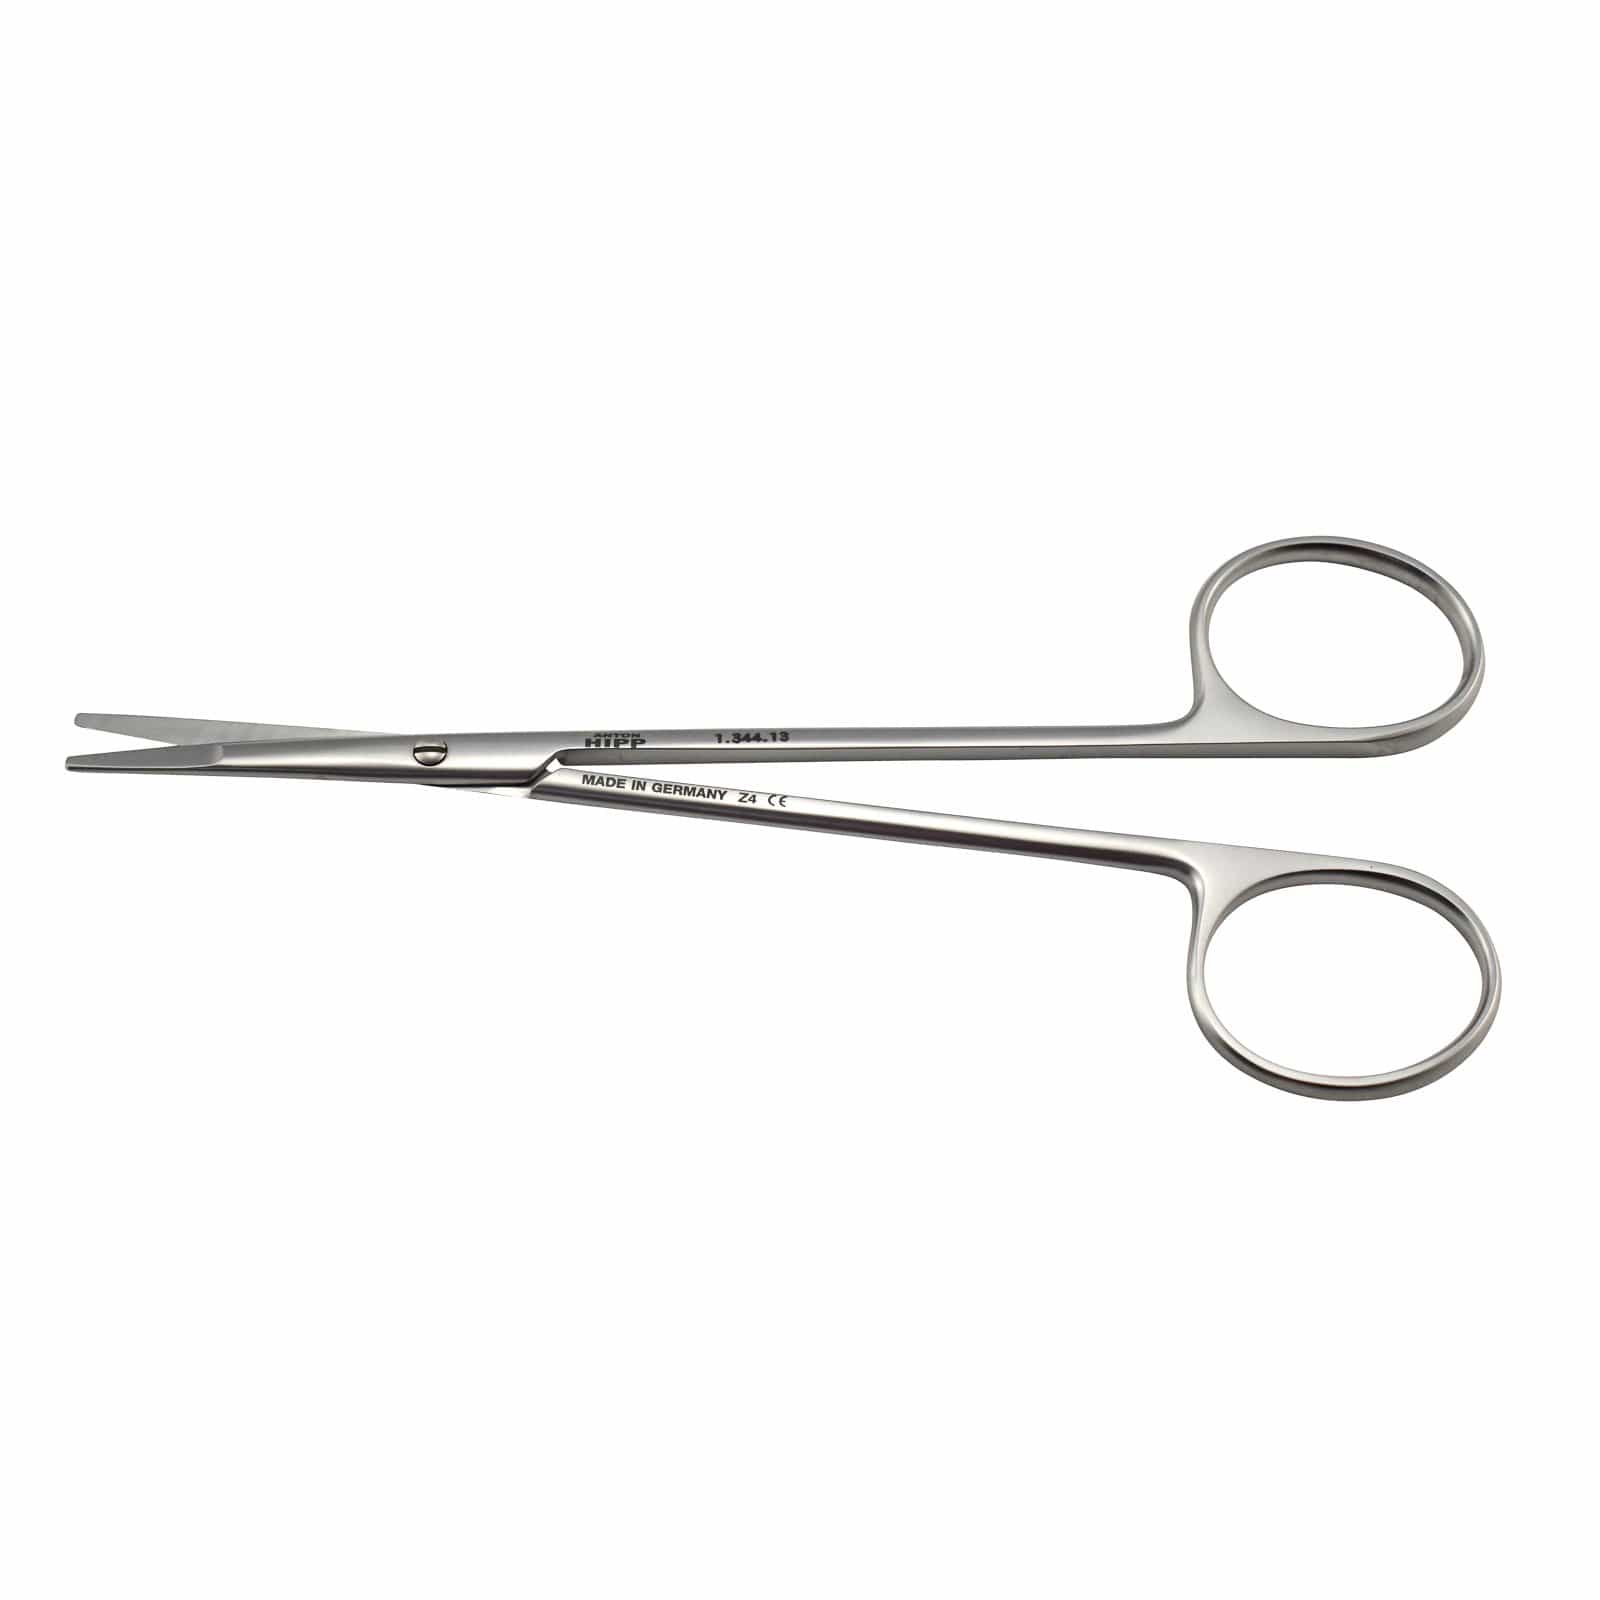 Hipp Surgical Instruments Hipp Kilner Scissors